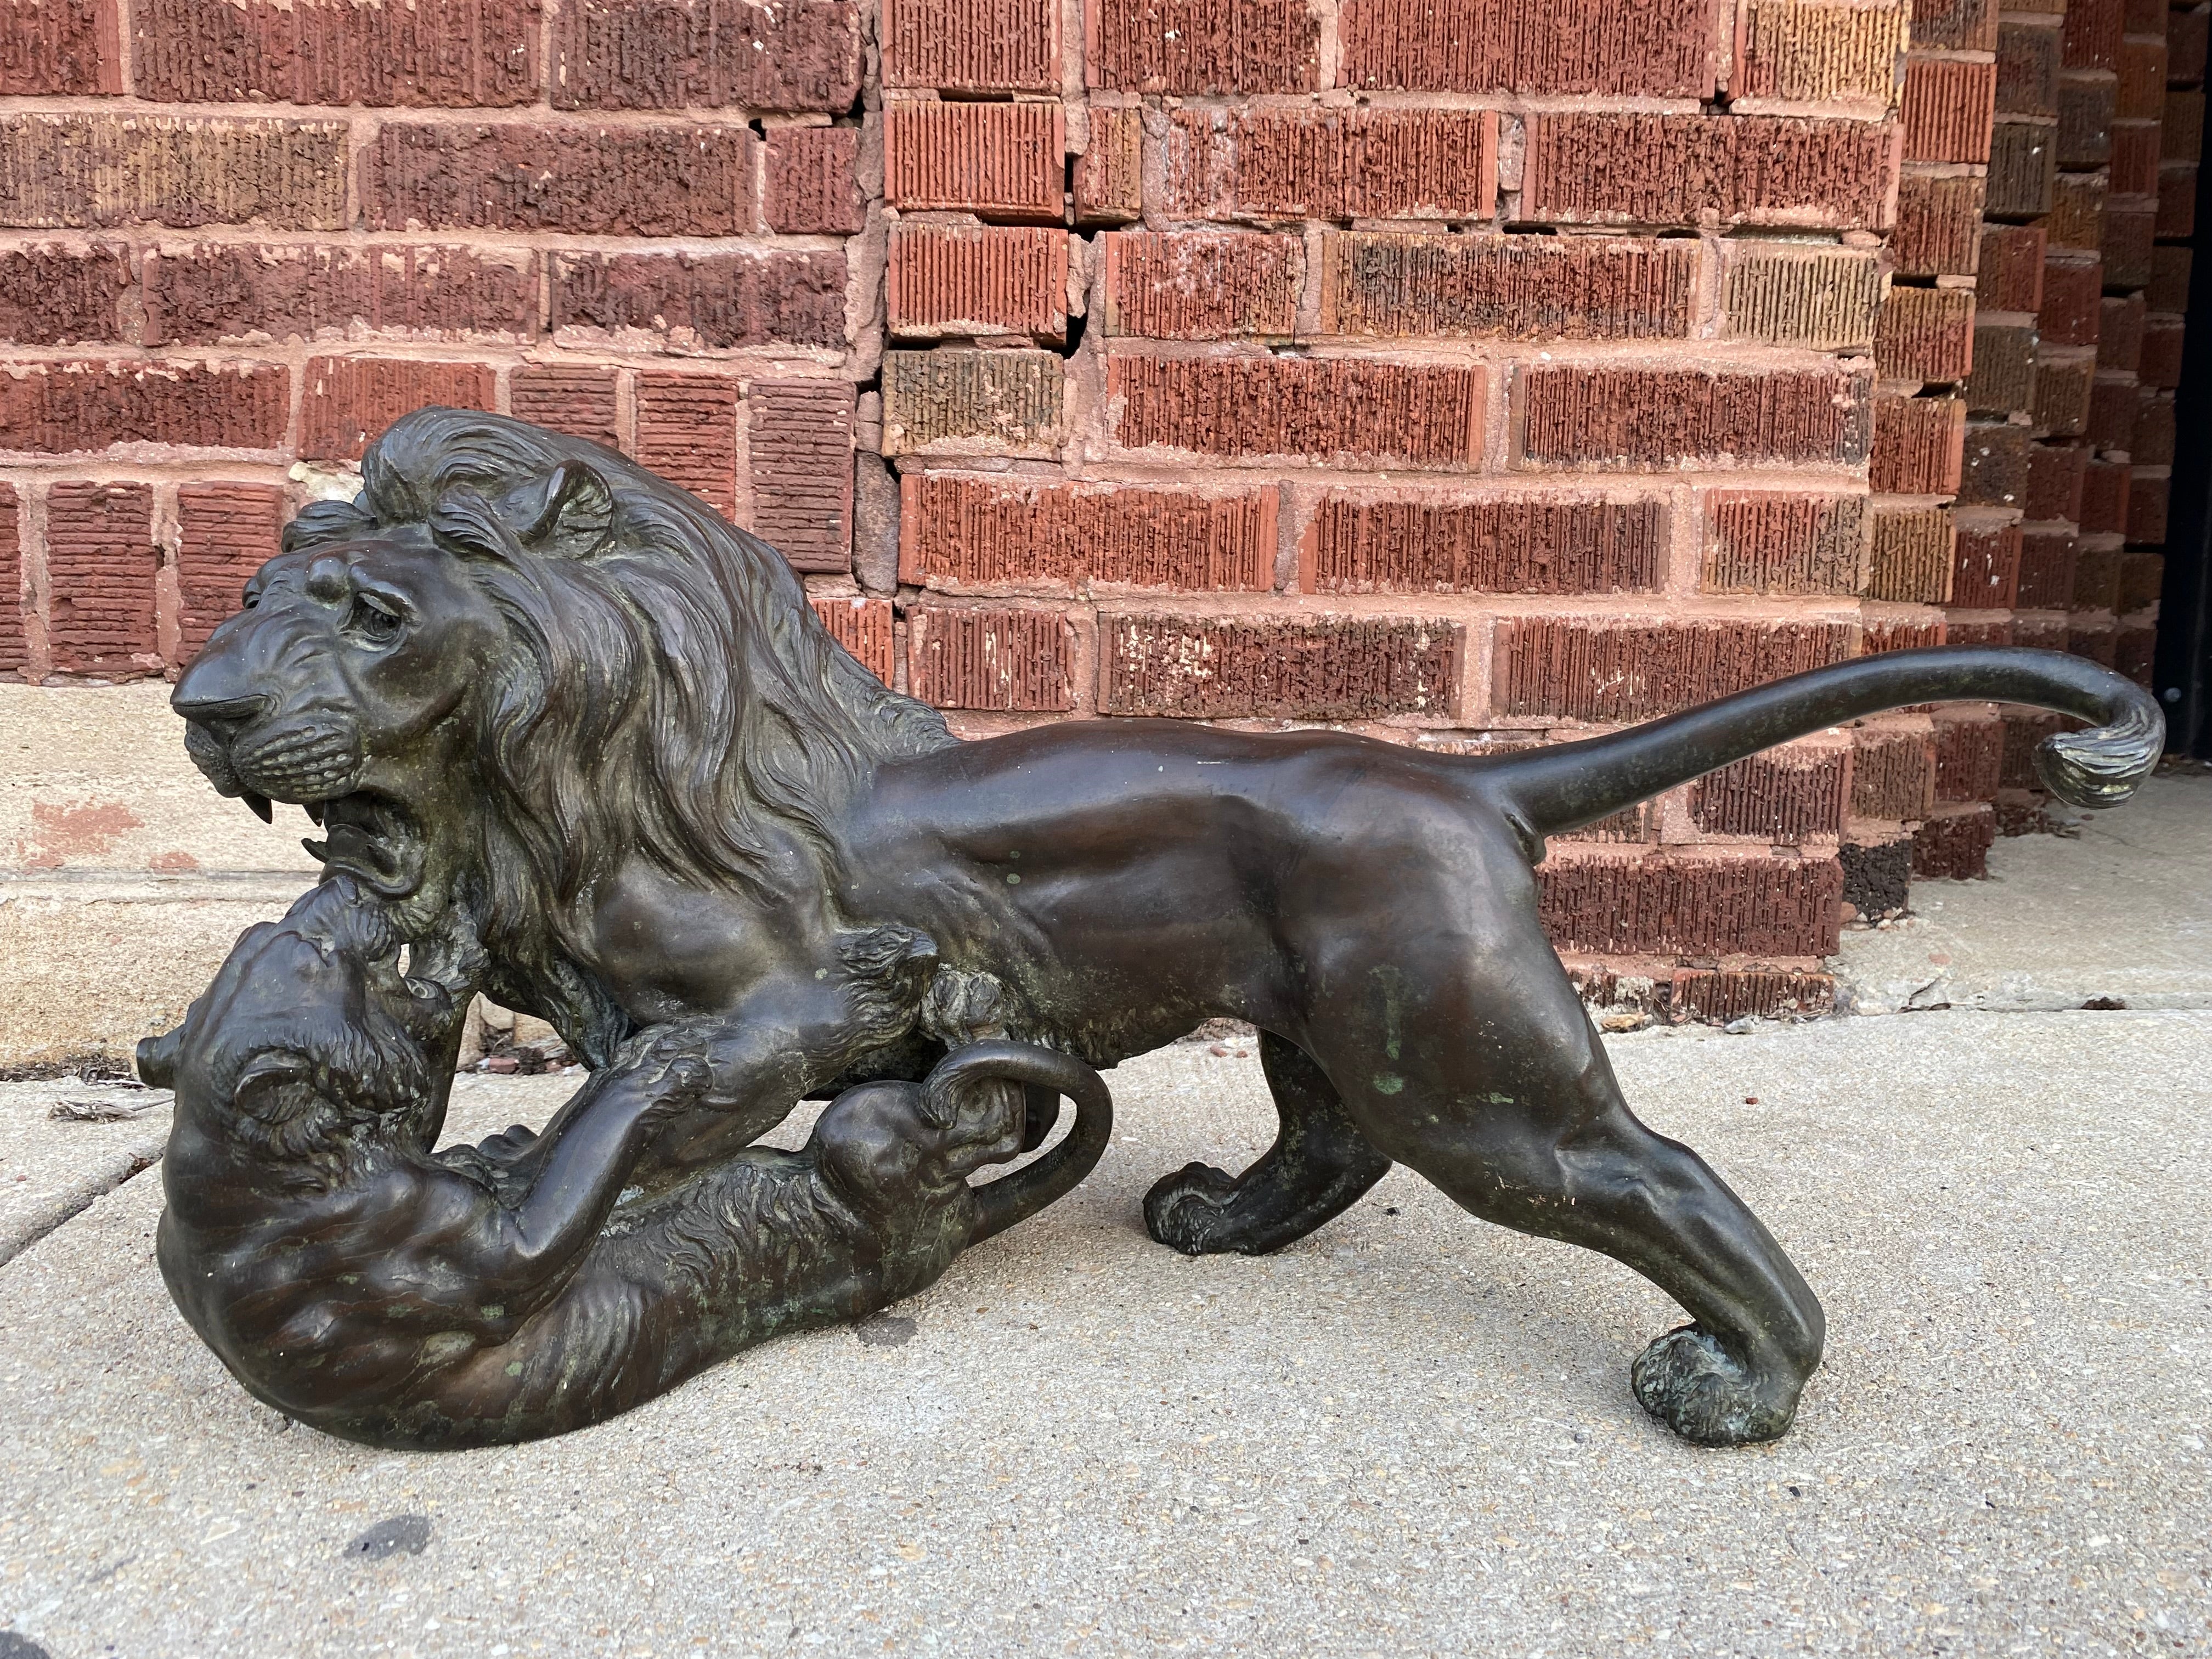 Antique Japanese Bronze Sculpture of Roaring Lion vs. Tiger